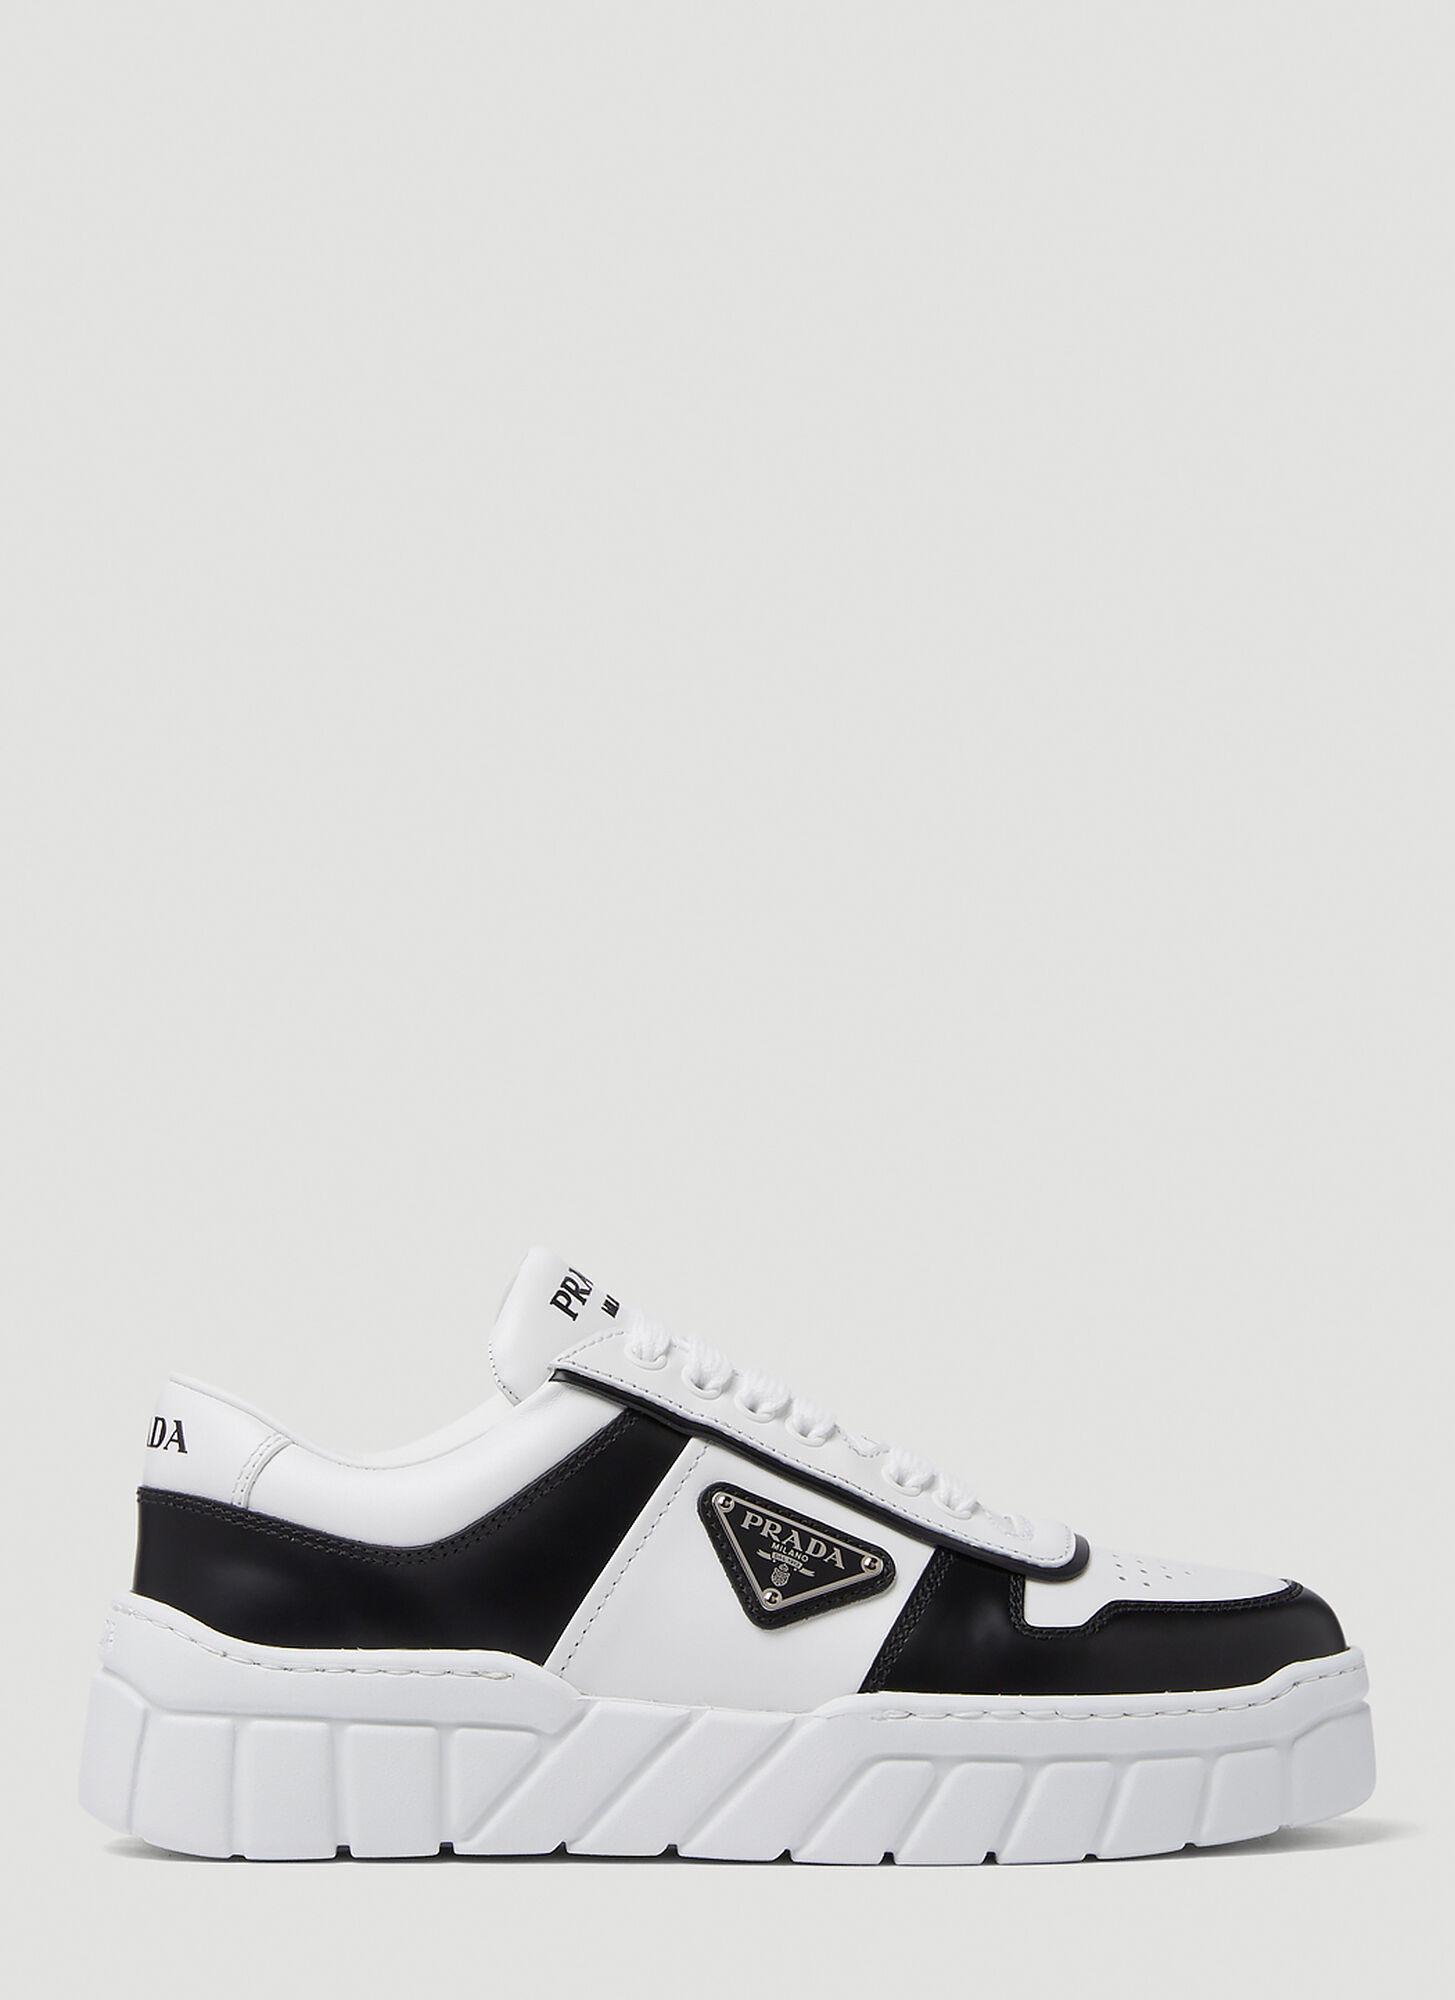 Prada Monochrome Sneakers in White | Lyst